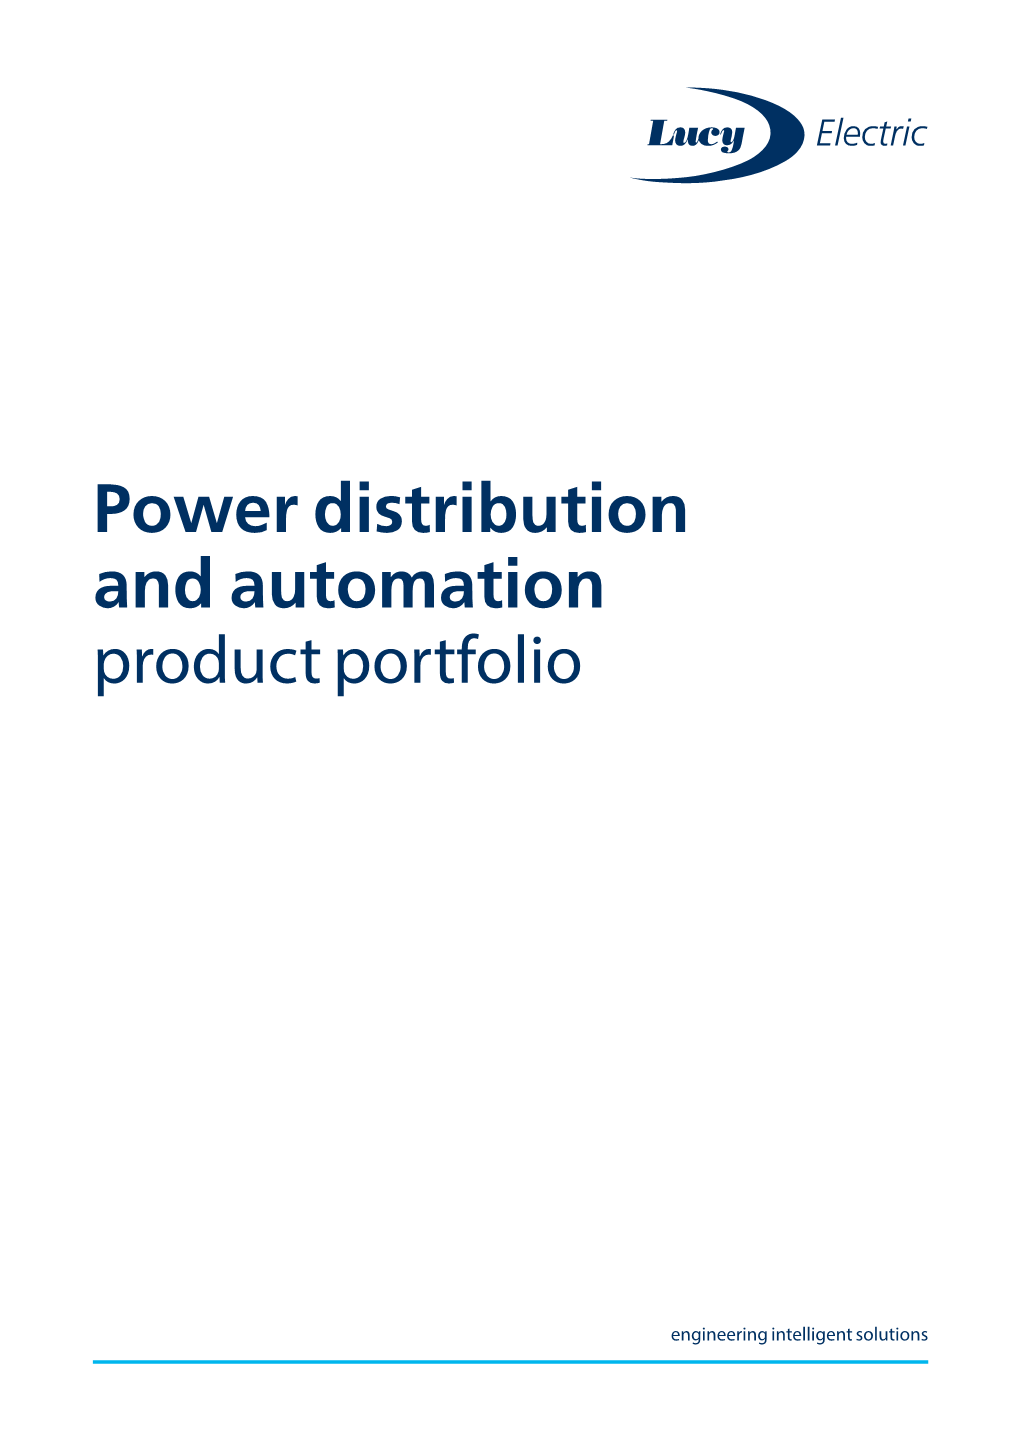 Power Distribution and Automation Product Portfolio